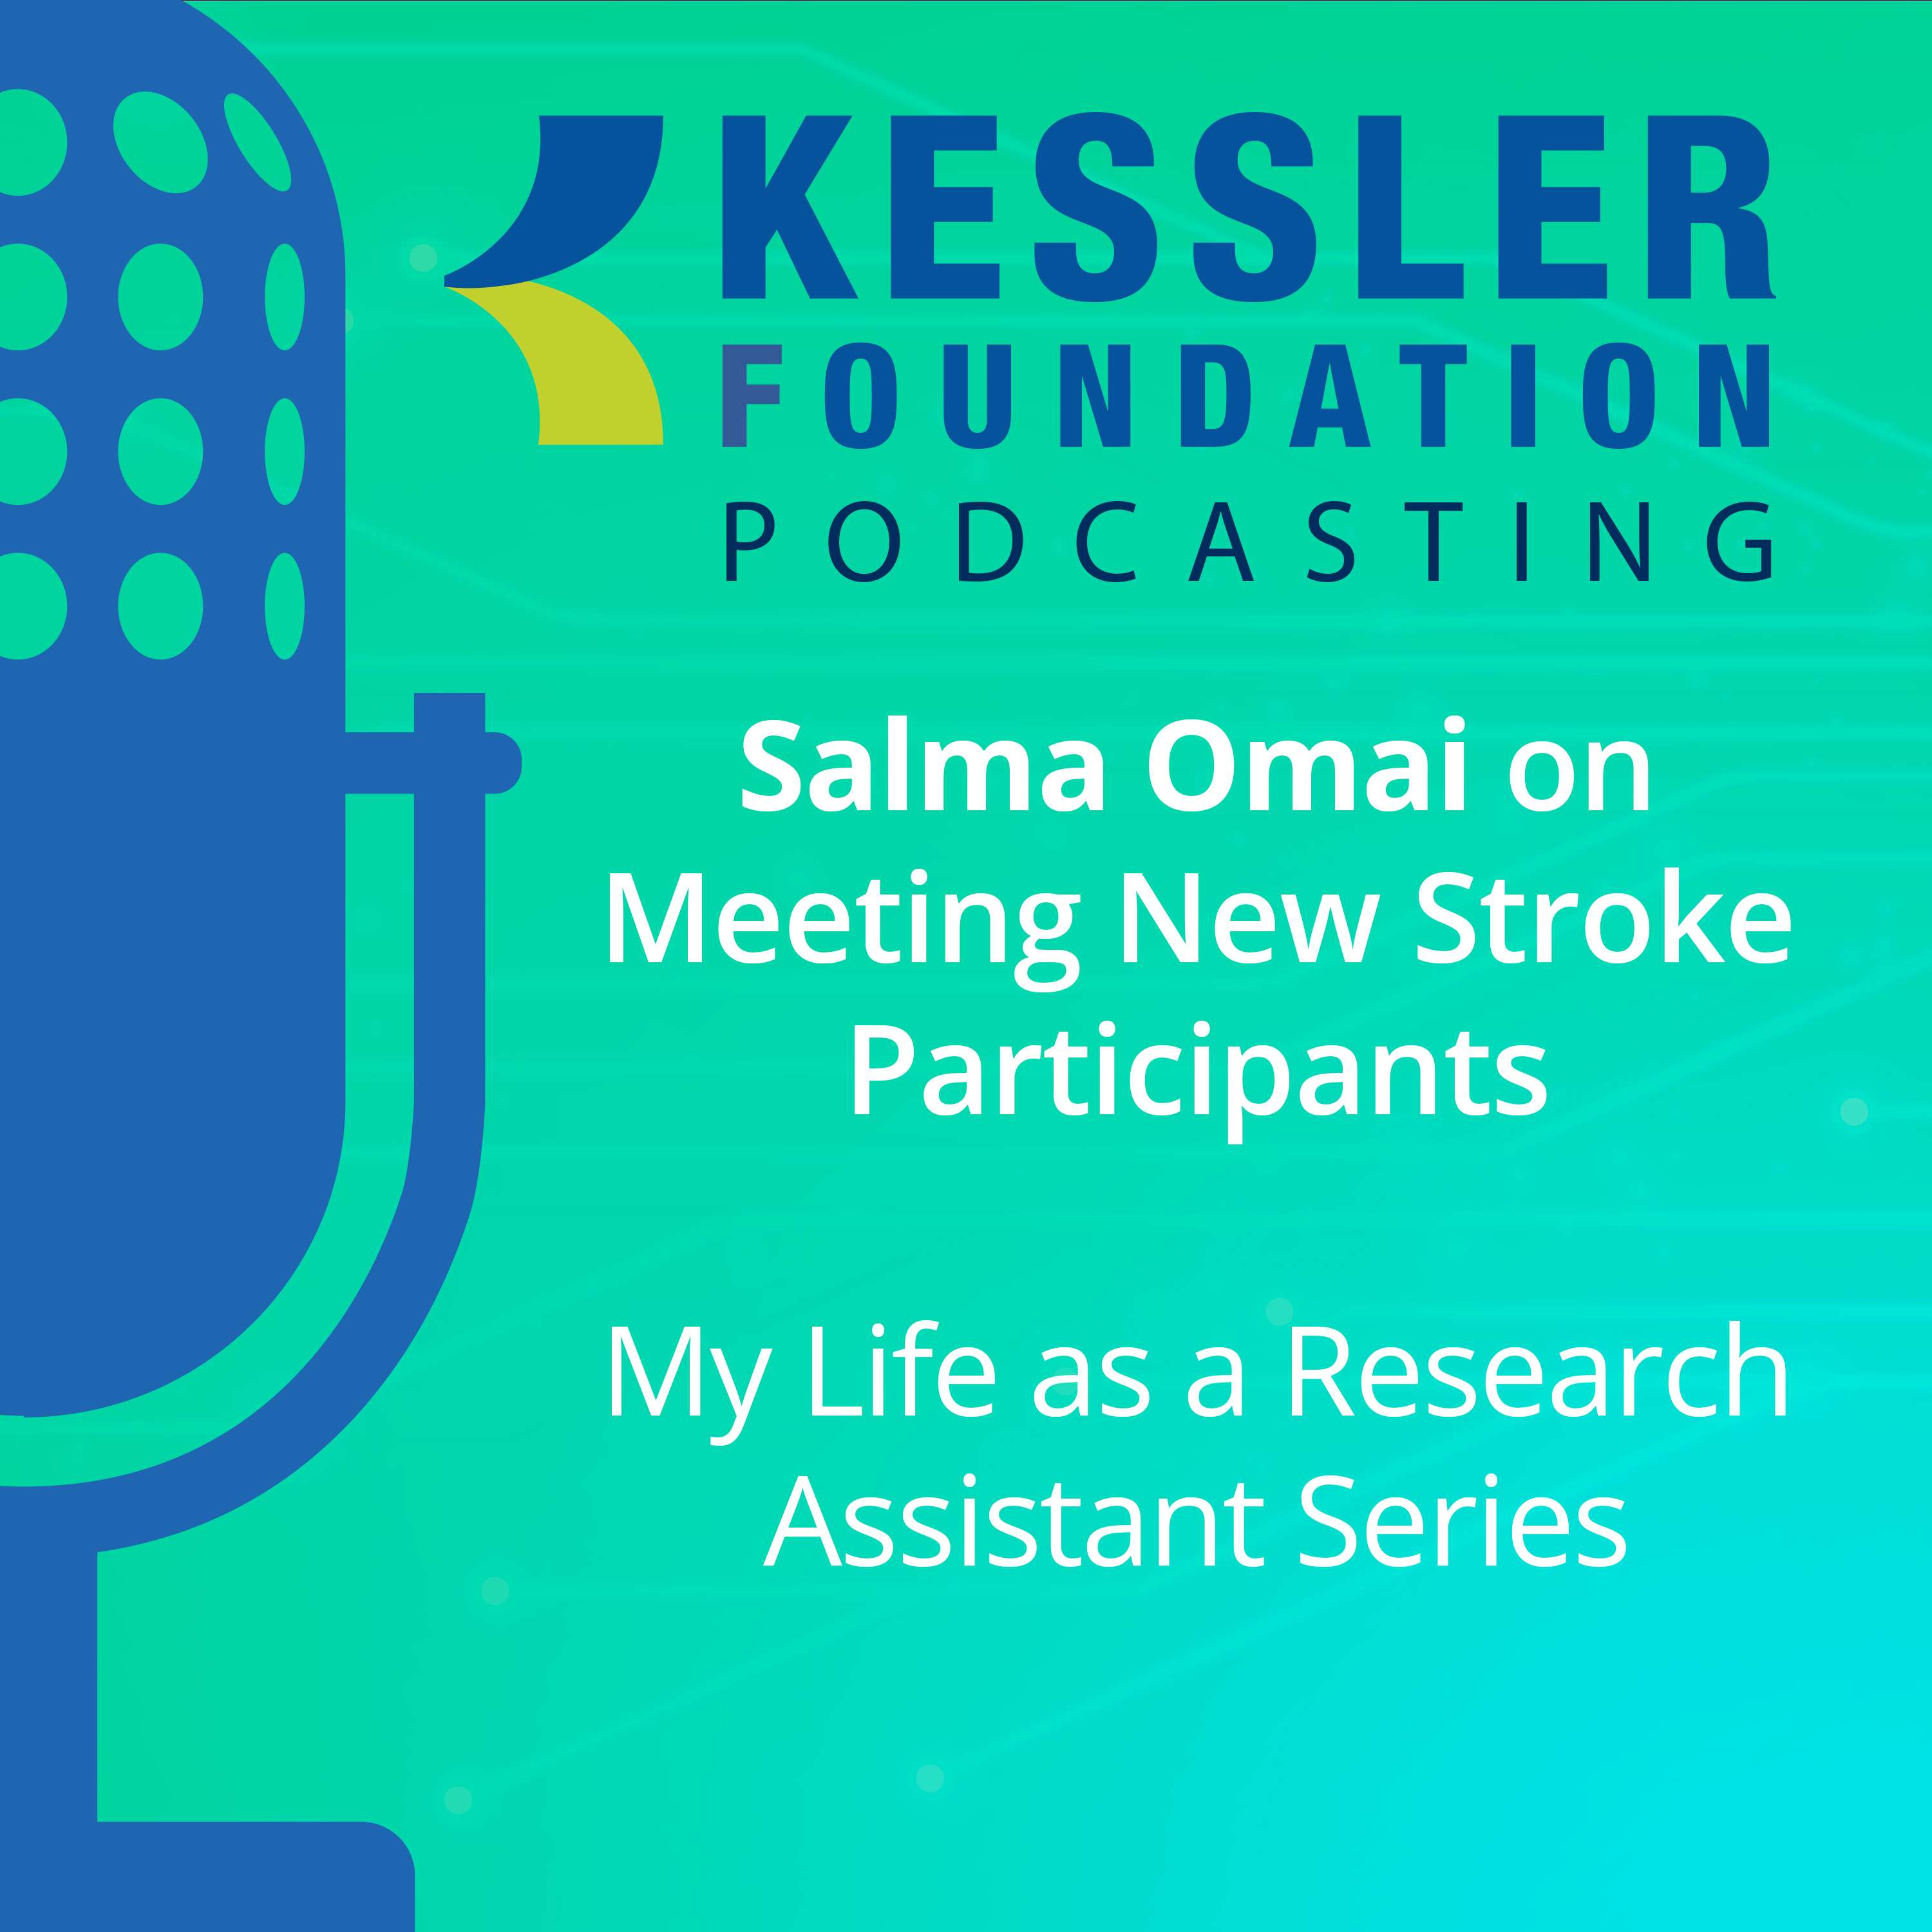 Salma Omai on Meeting New Stroke Participants